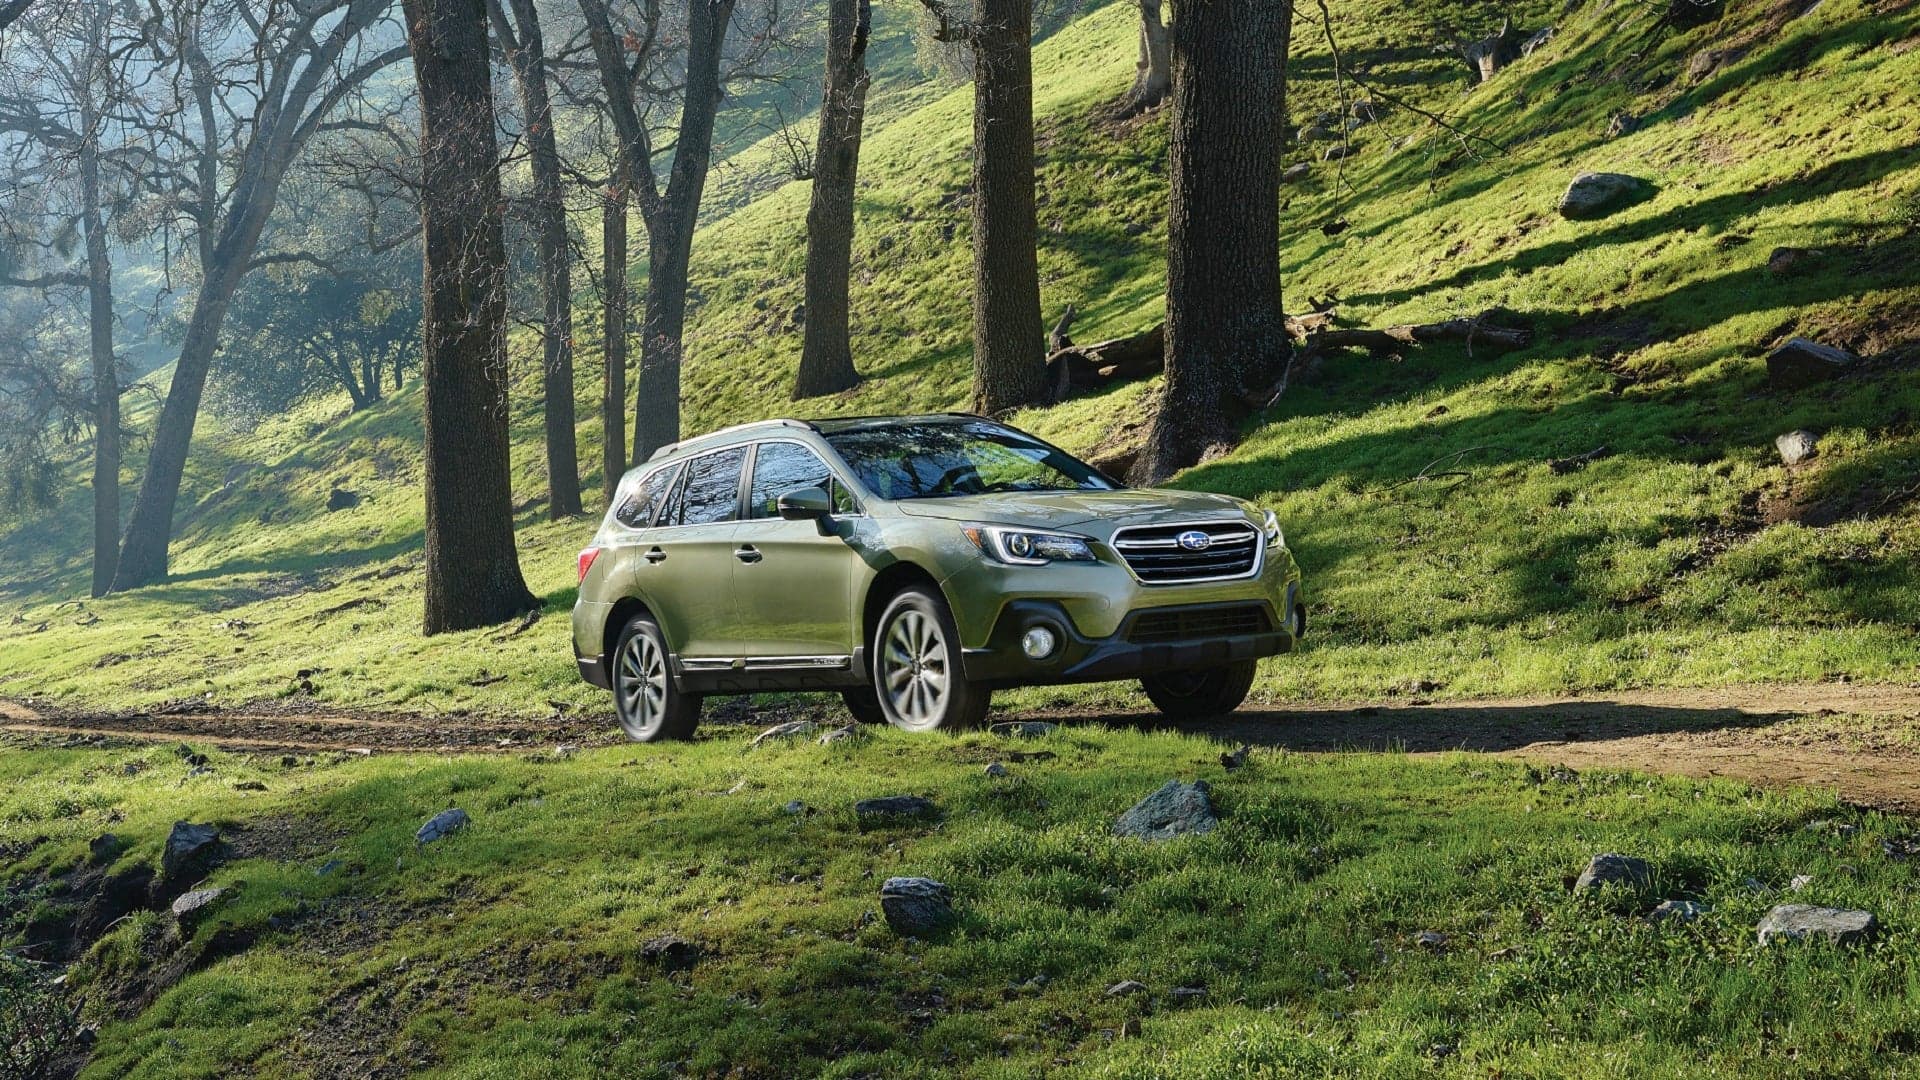 Subaru Patents ‘Evoltis’ Name Ahead of Anticipated New Plug-In Hybrid